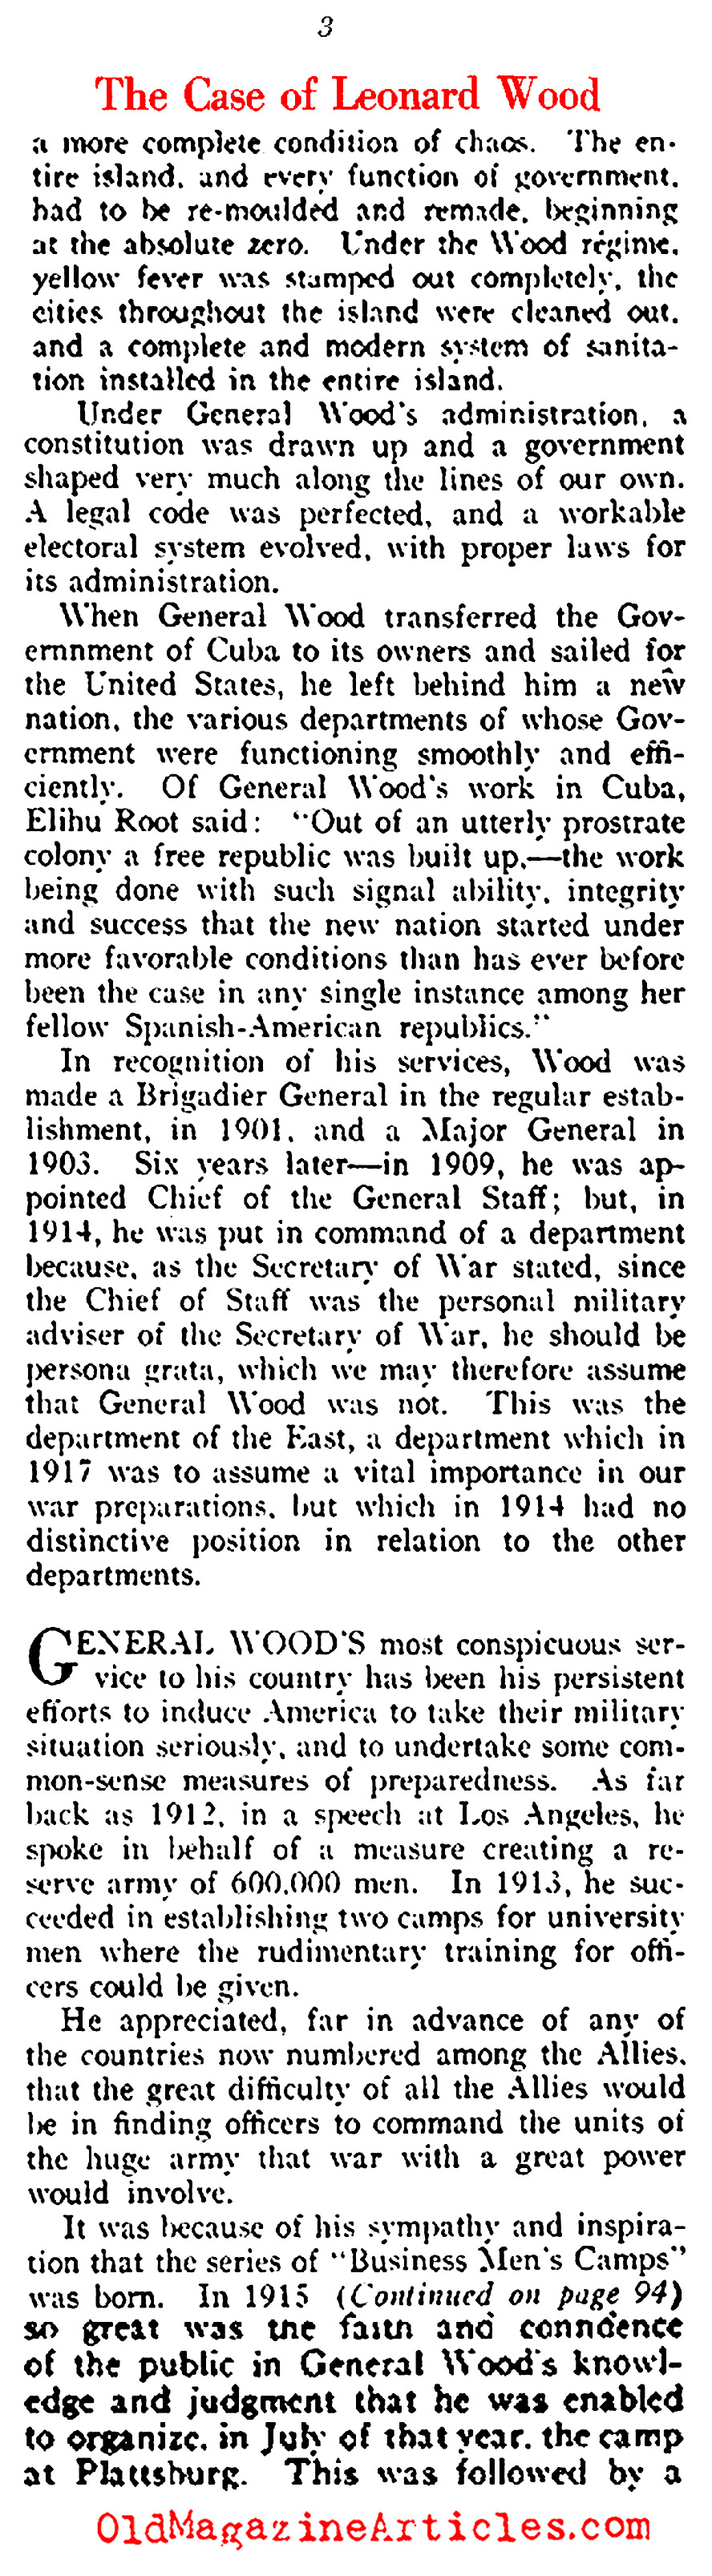 The Case for Leonard Wood (Vanity Fair, 1918)